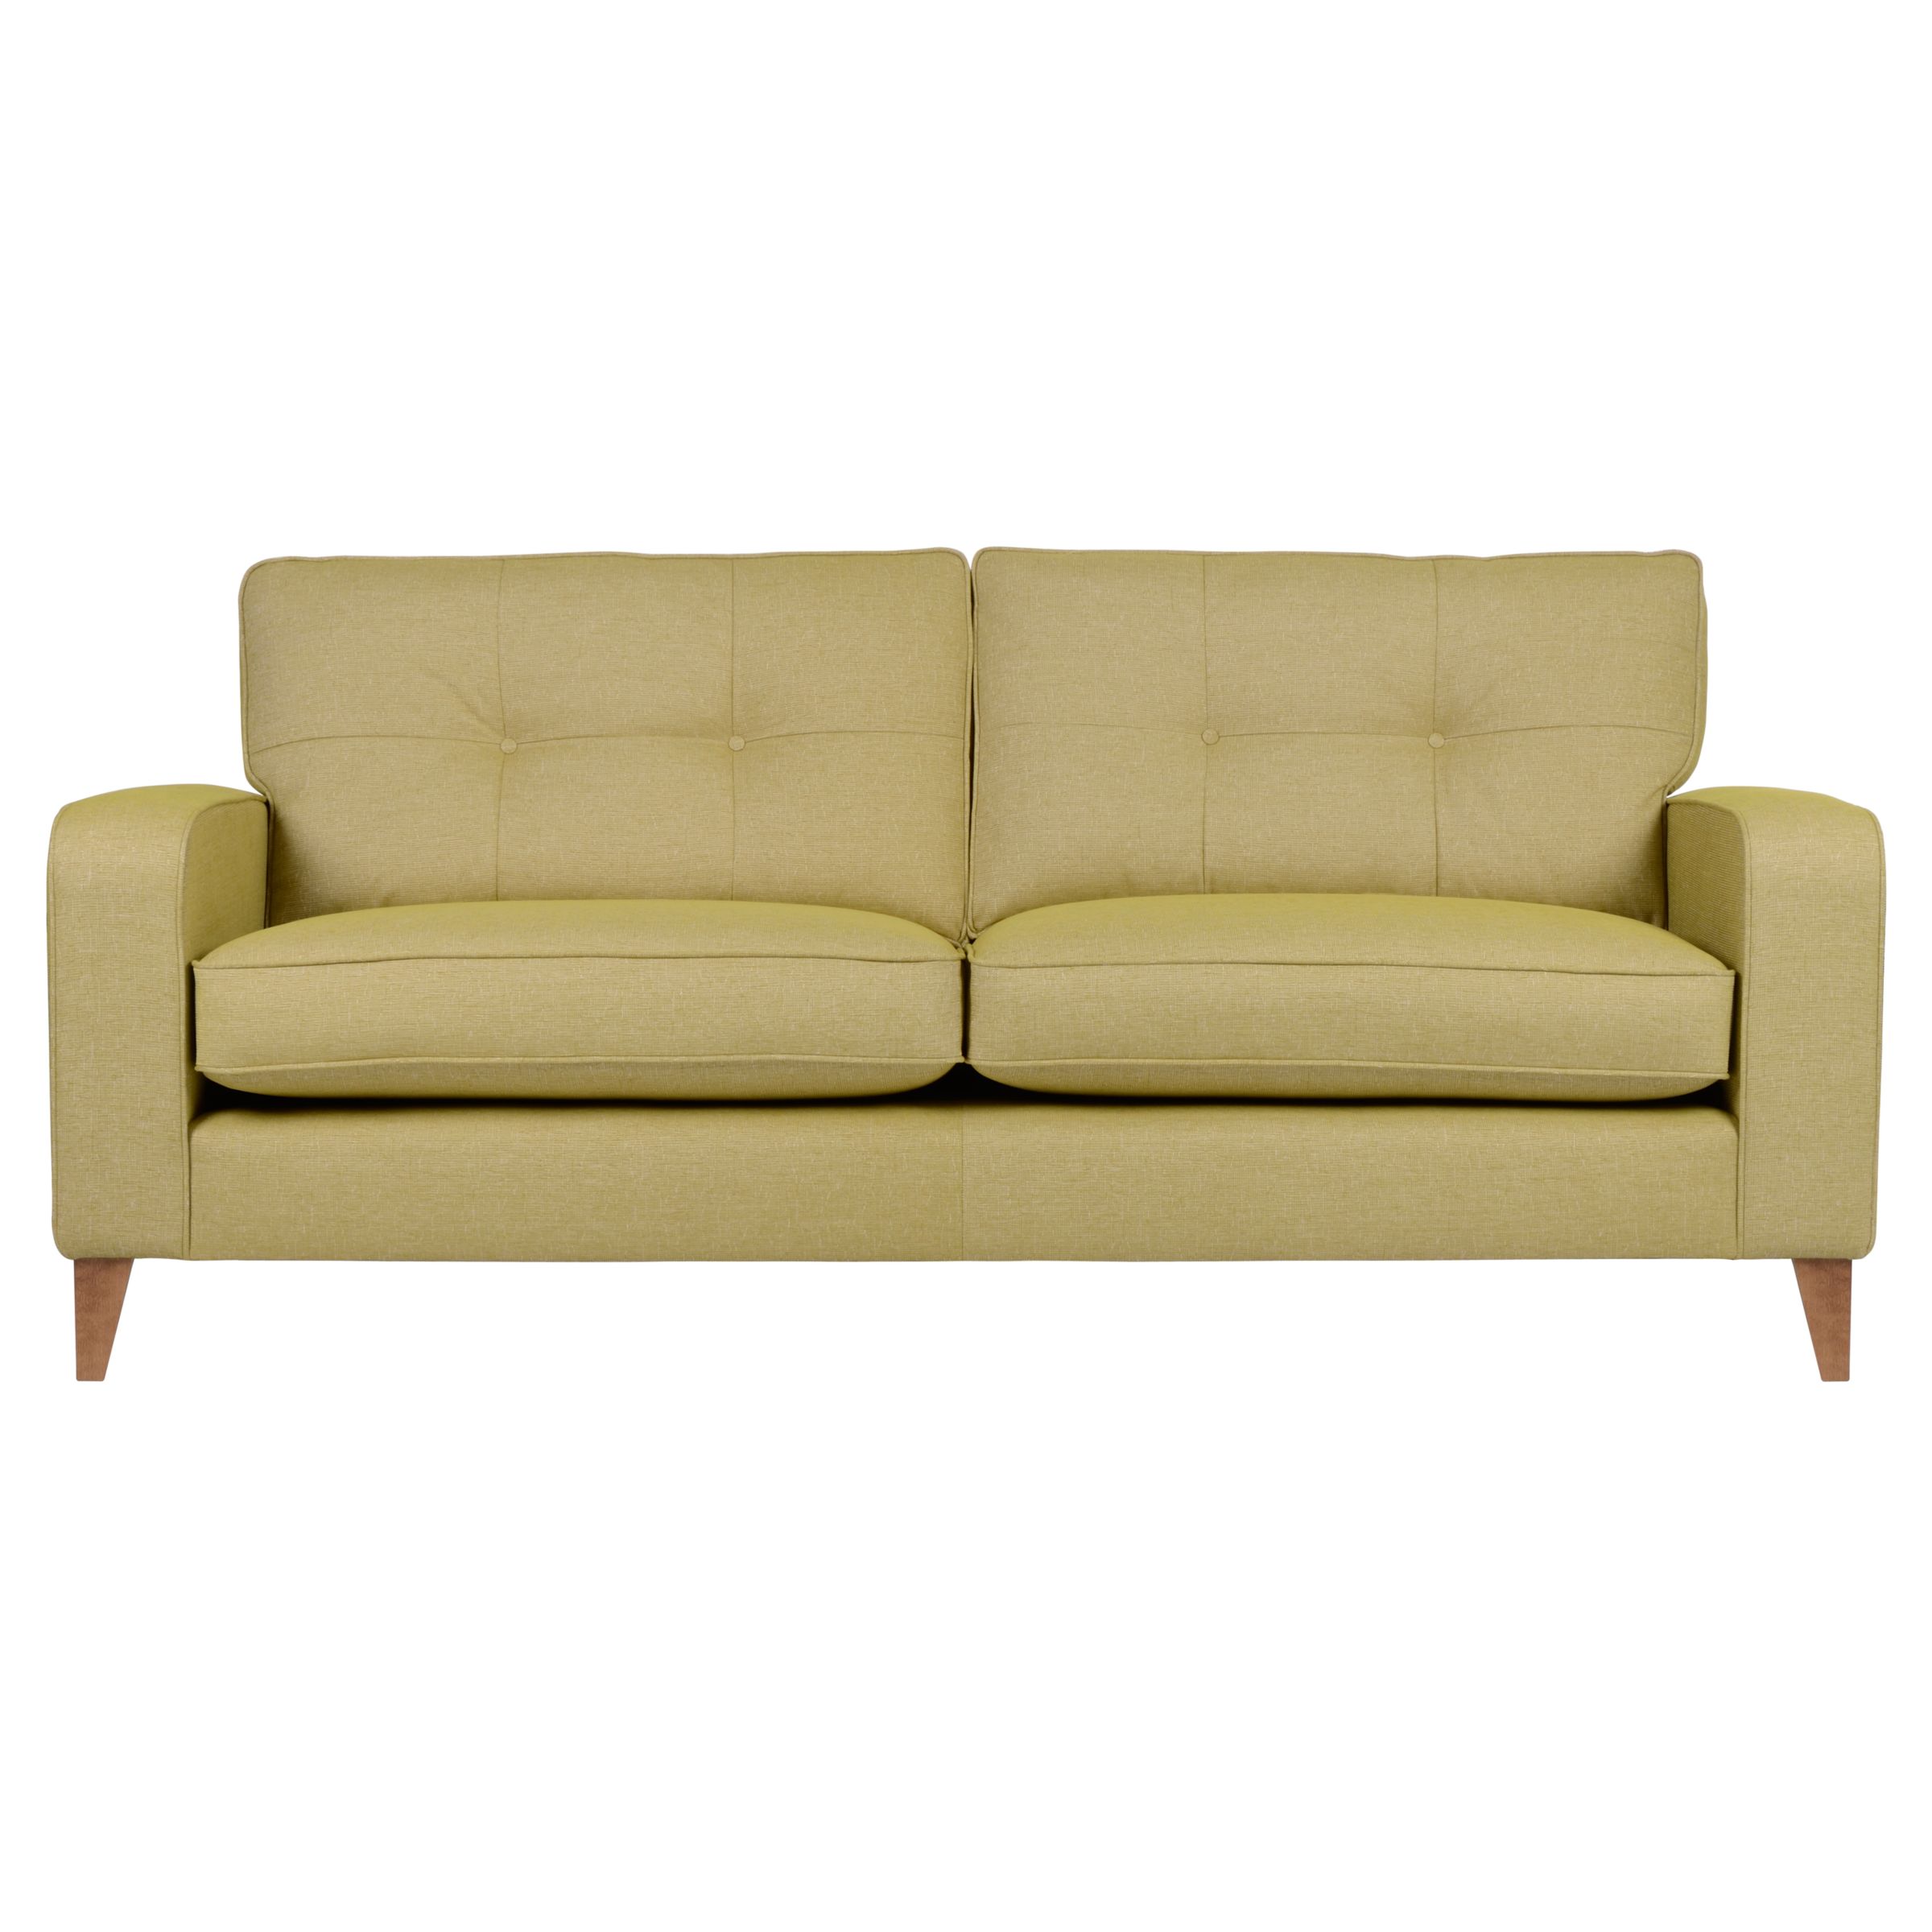 John Lewis Fred Large Sofa, Verve Lime, width 199cm